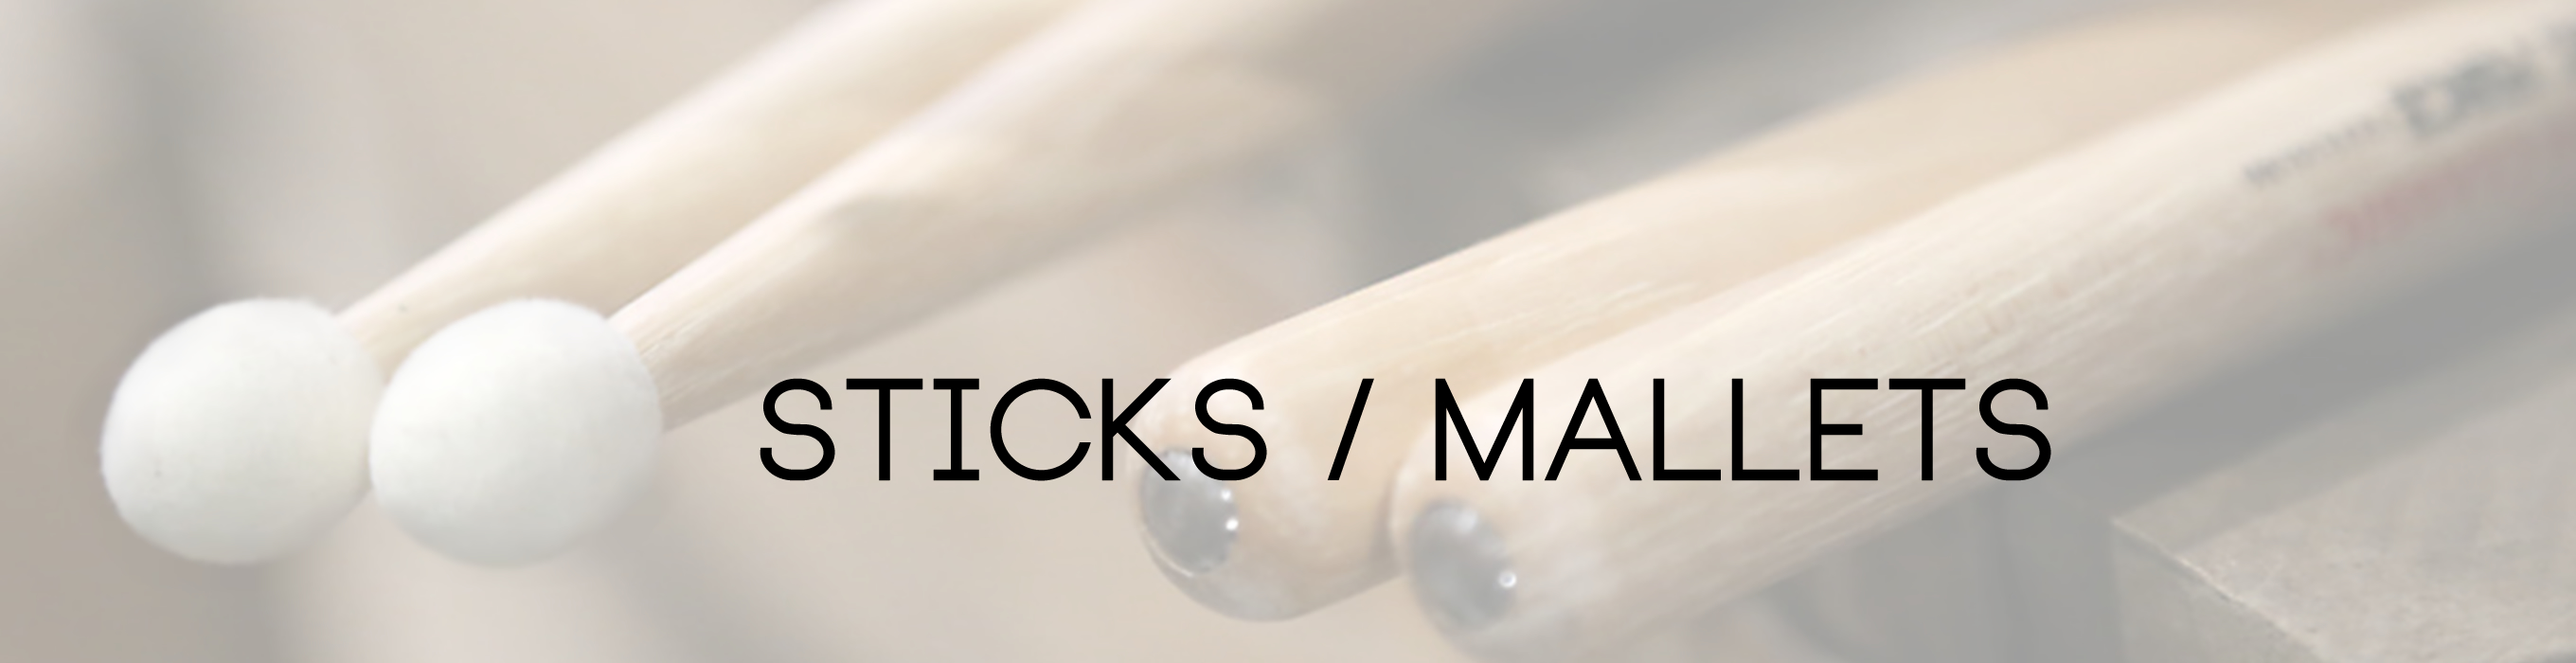 Sticks / Mallets